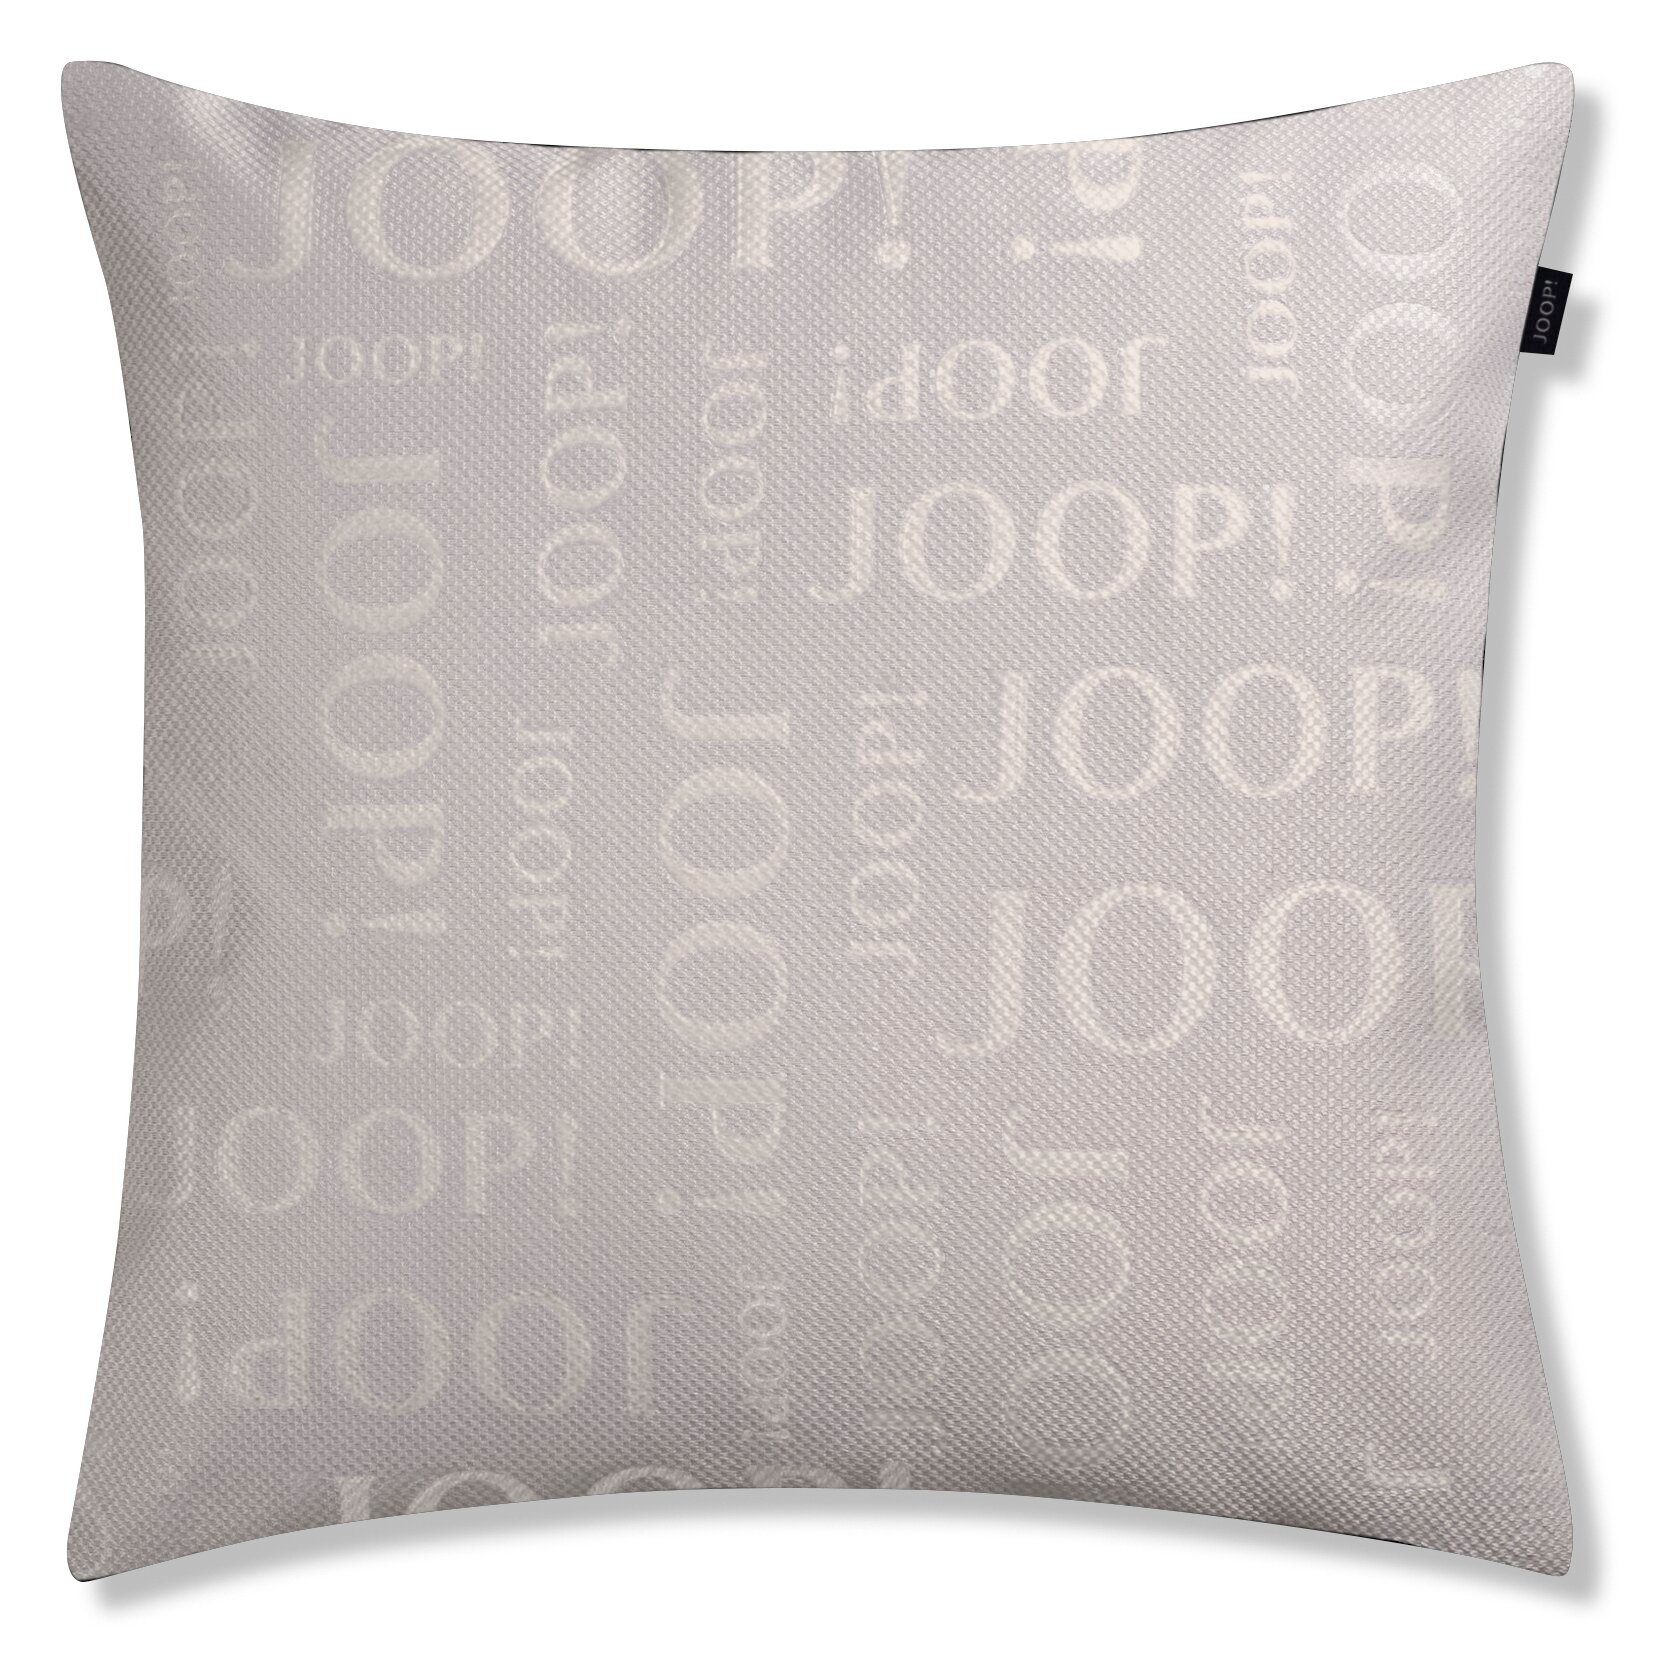 JOOP! Bilderrahmen online kaufen | OTTO